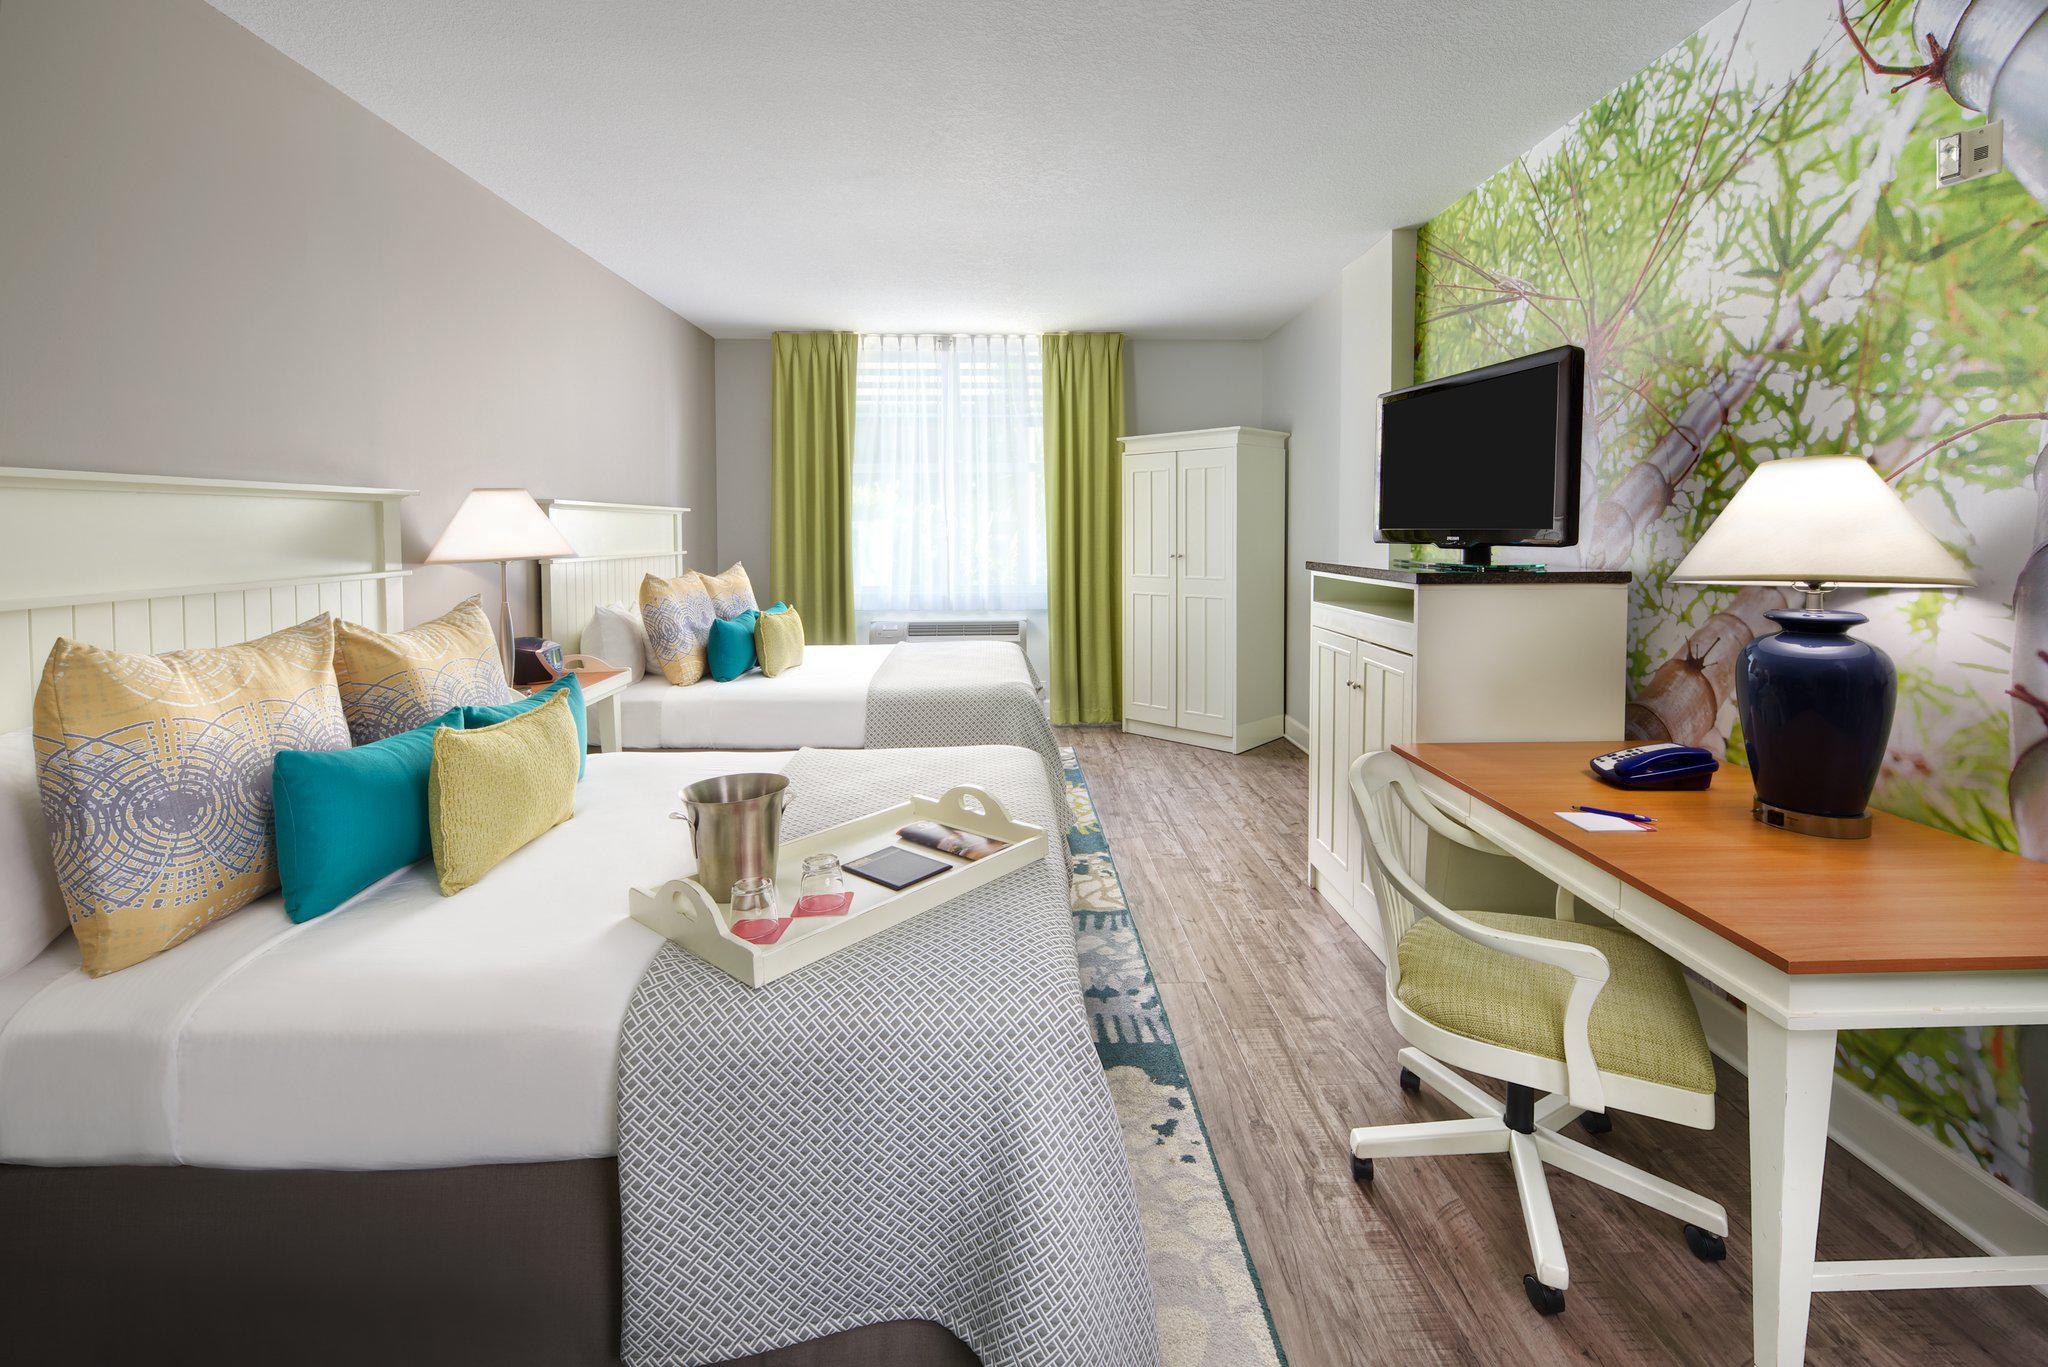 Hotel Indigo Sarasota Photo